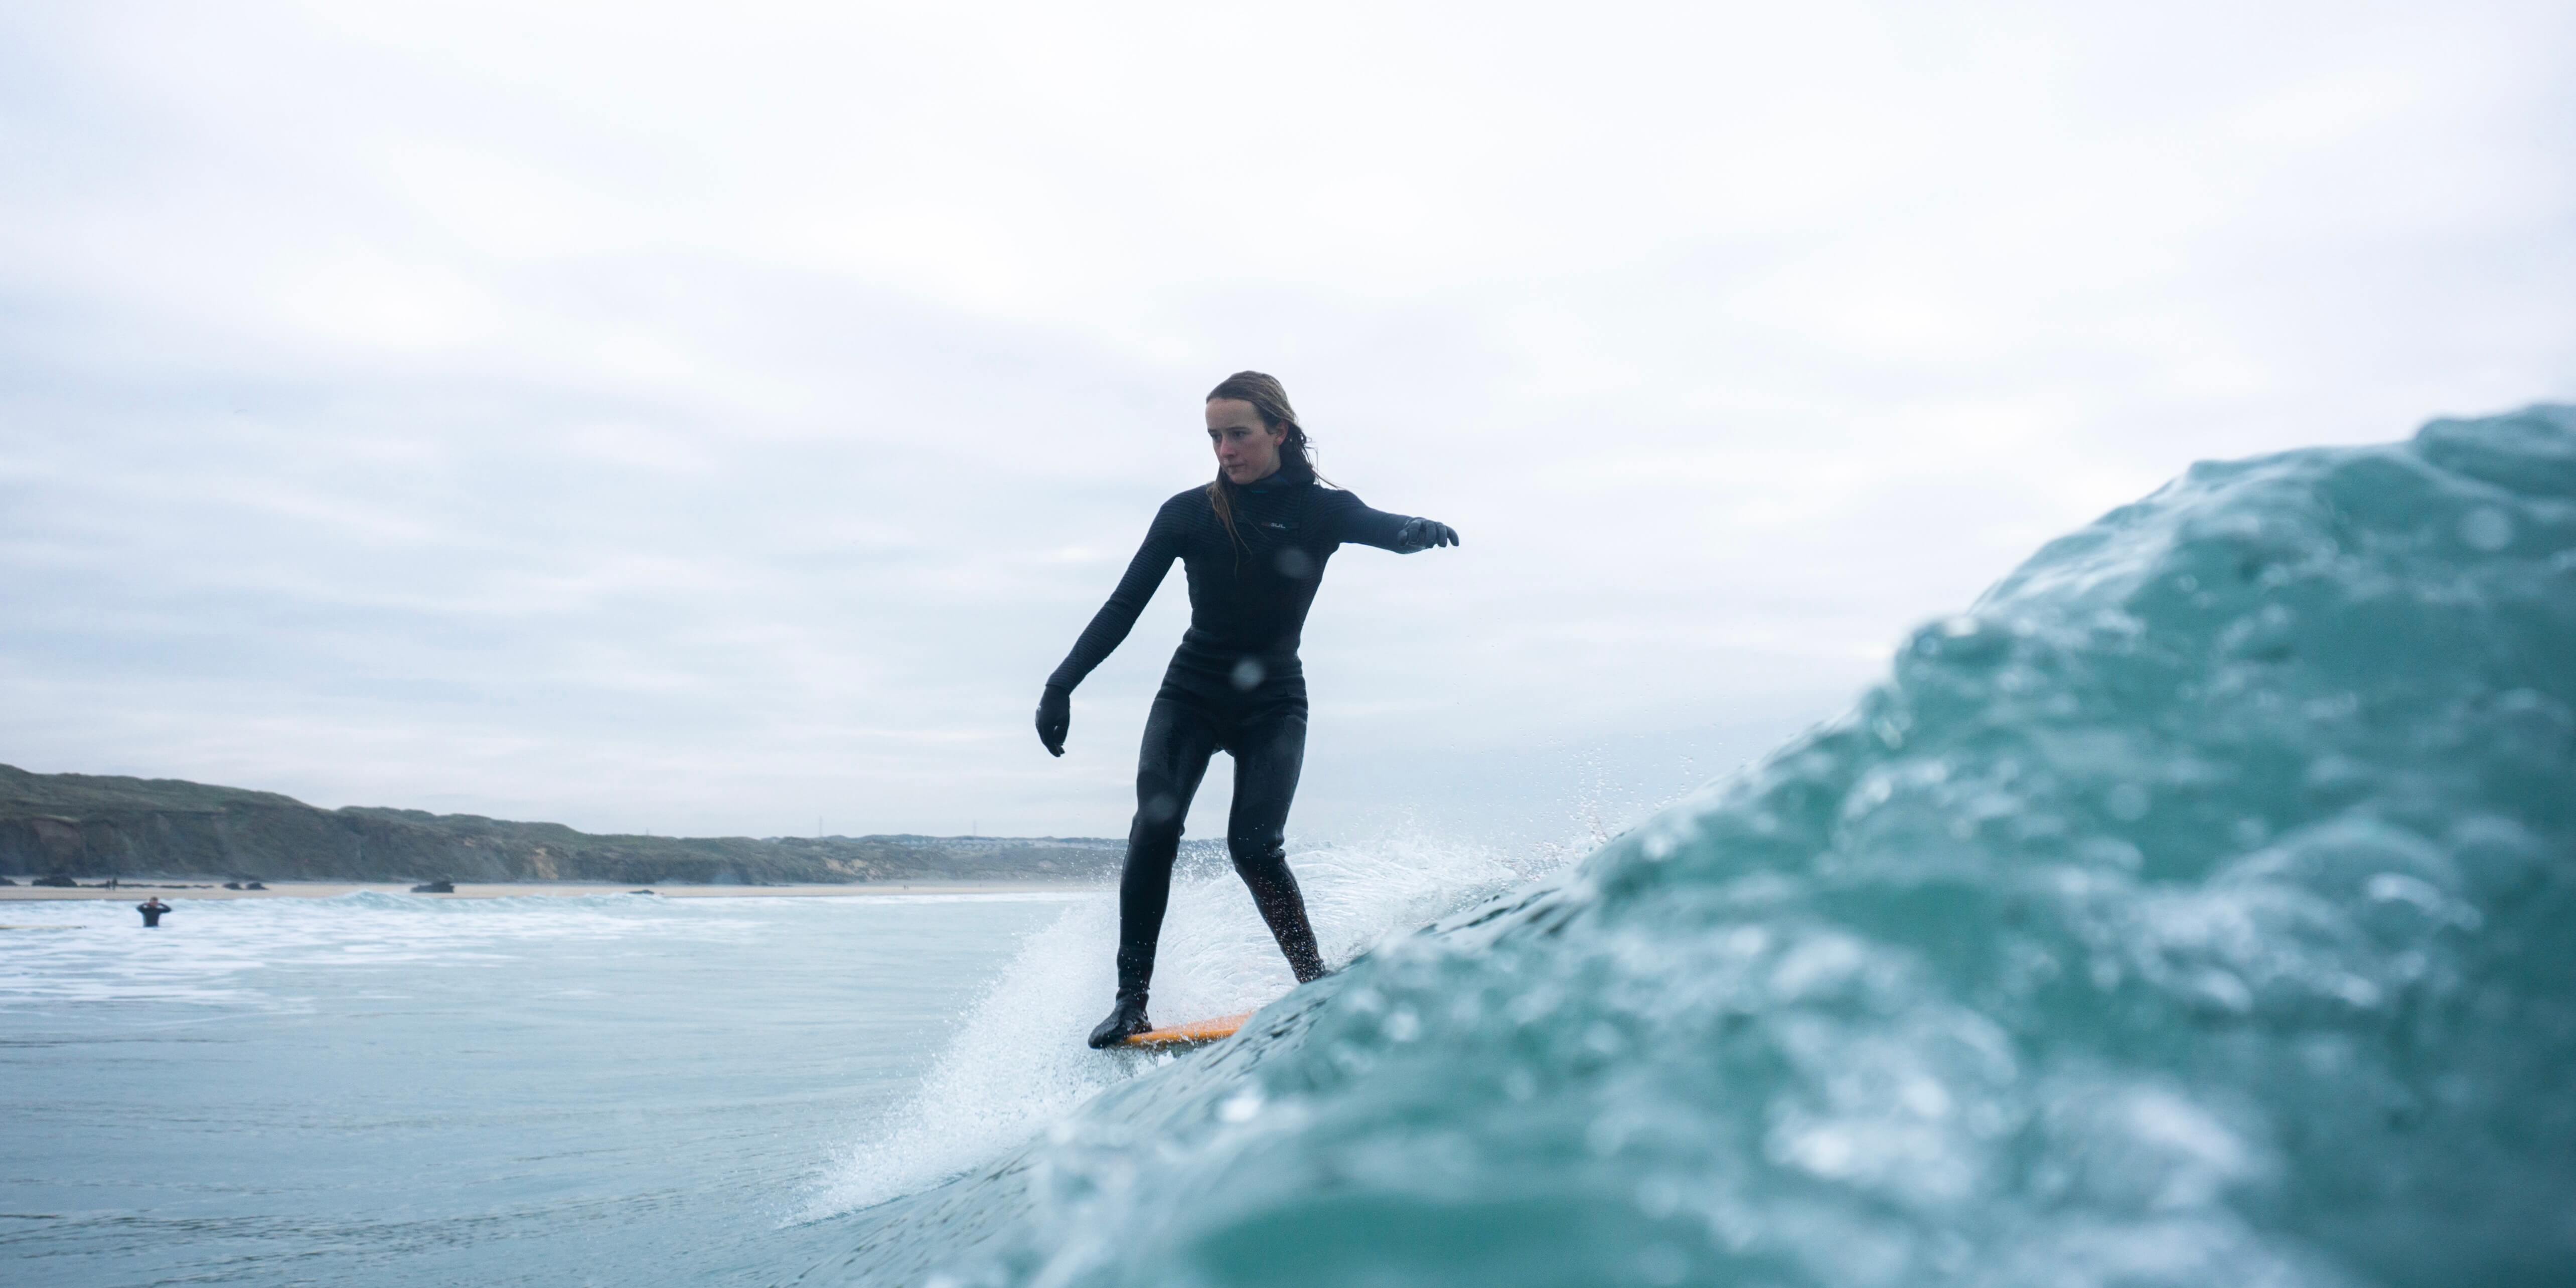 Beth Leighfield | REBEL SURF CO.